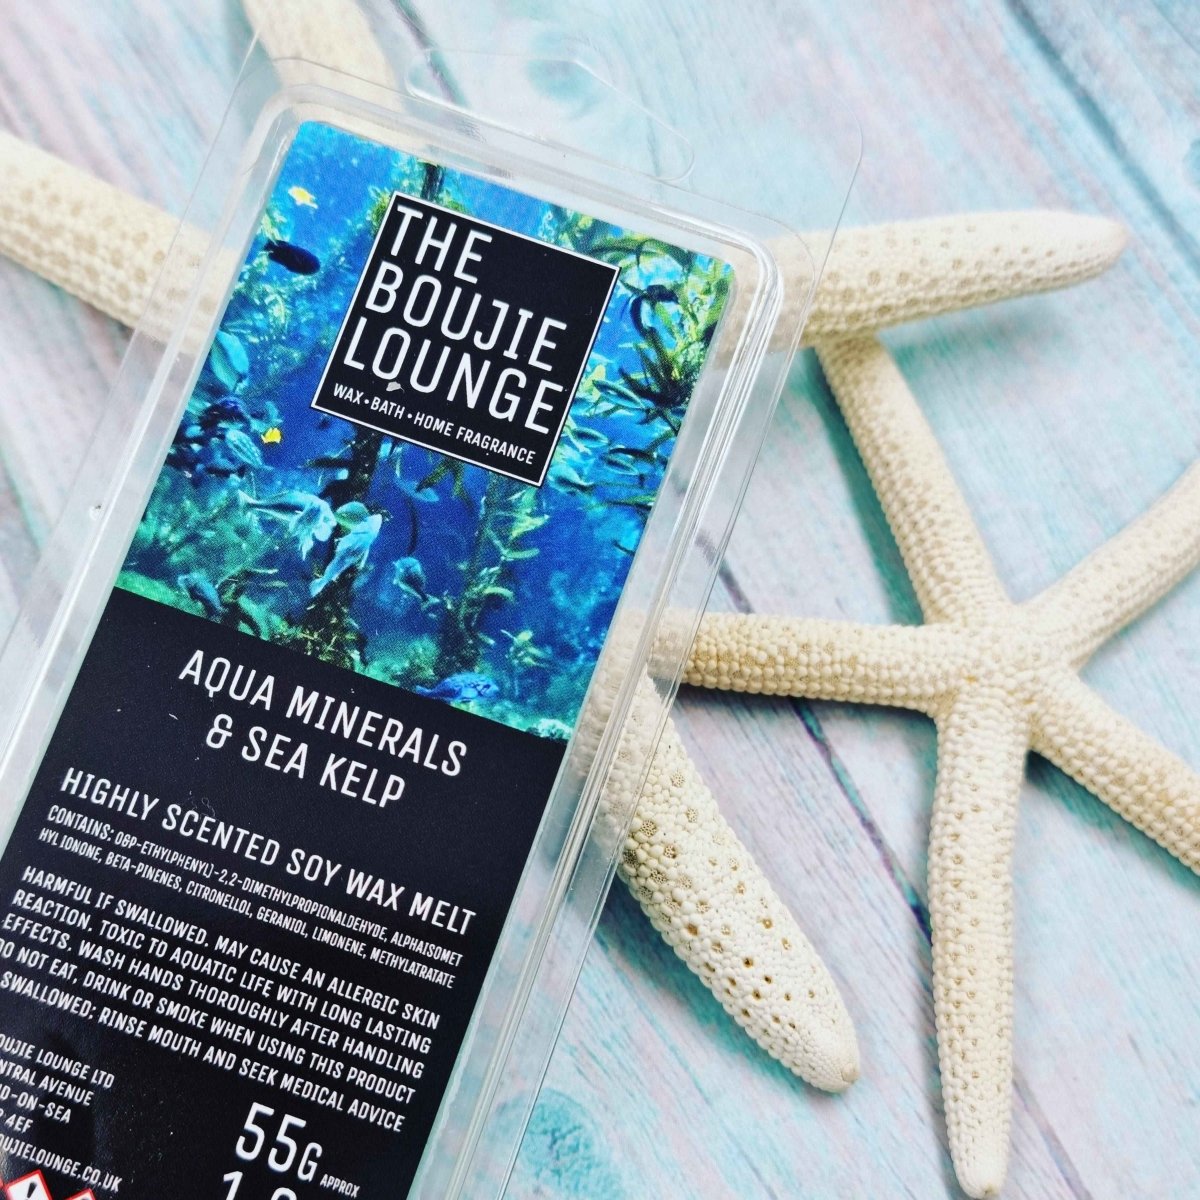 Aqua Minerals & Sea Kelp High Performance Wax Melt | The Boujie Lounge